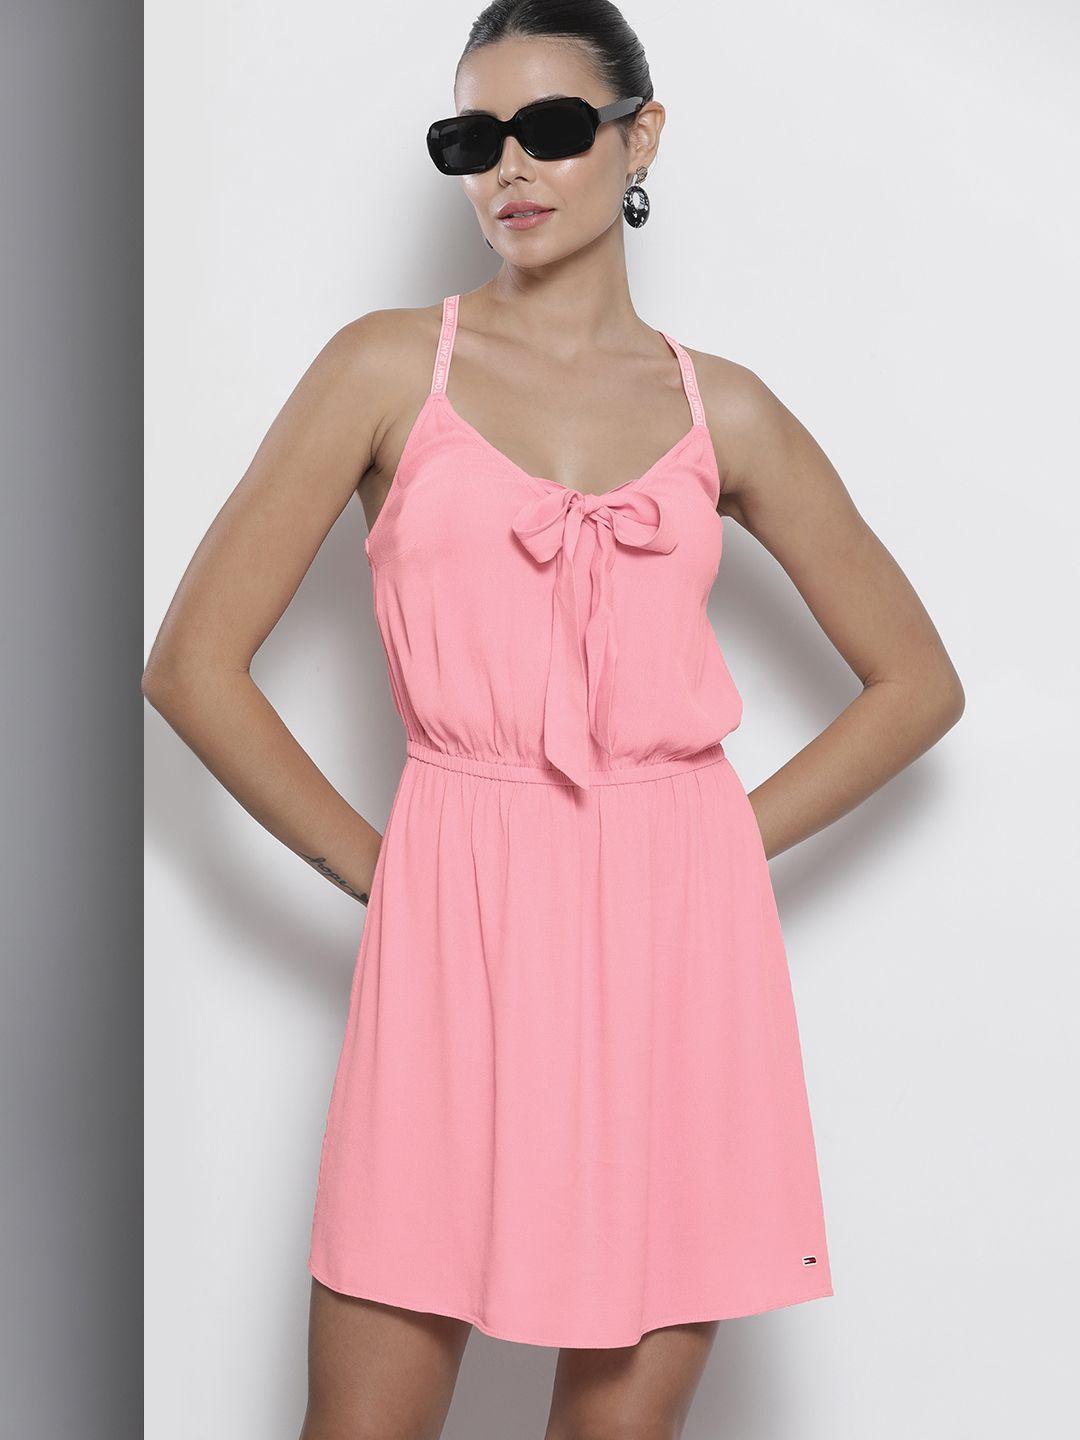 tommy hilfiger women pink solid fit & flare dress